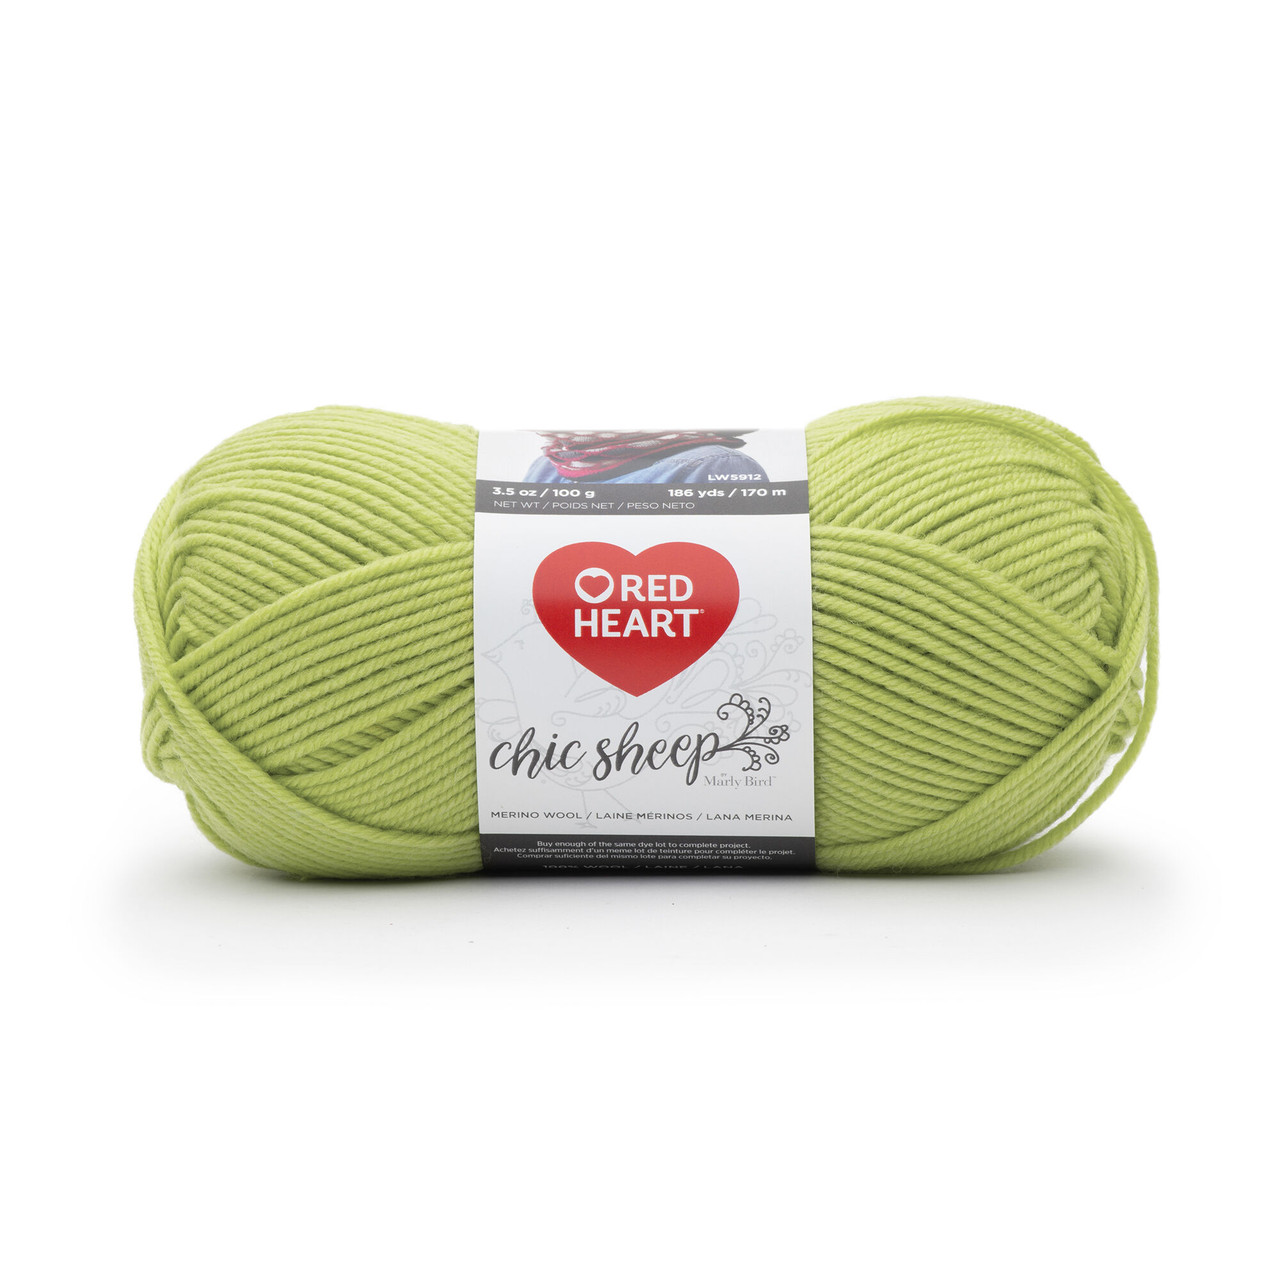 Red Heart Chic Sheep Merino Wool by Marley Green Tea Knitting & Crochet Yarn